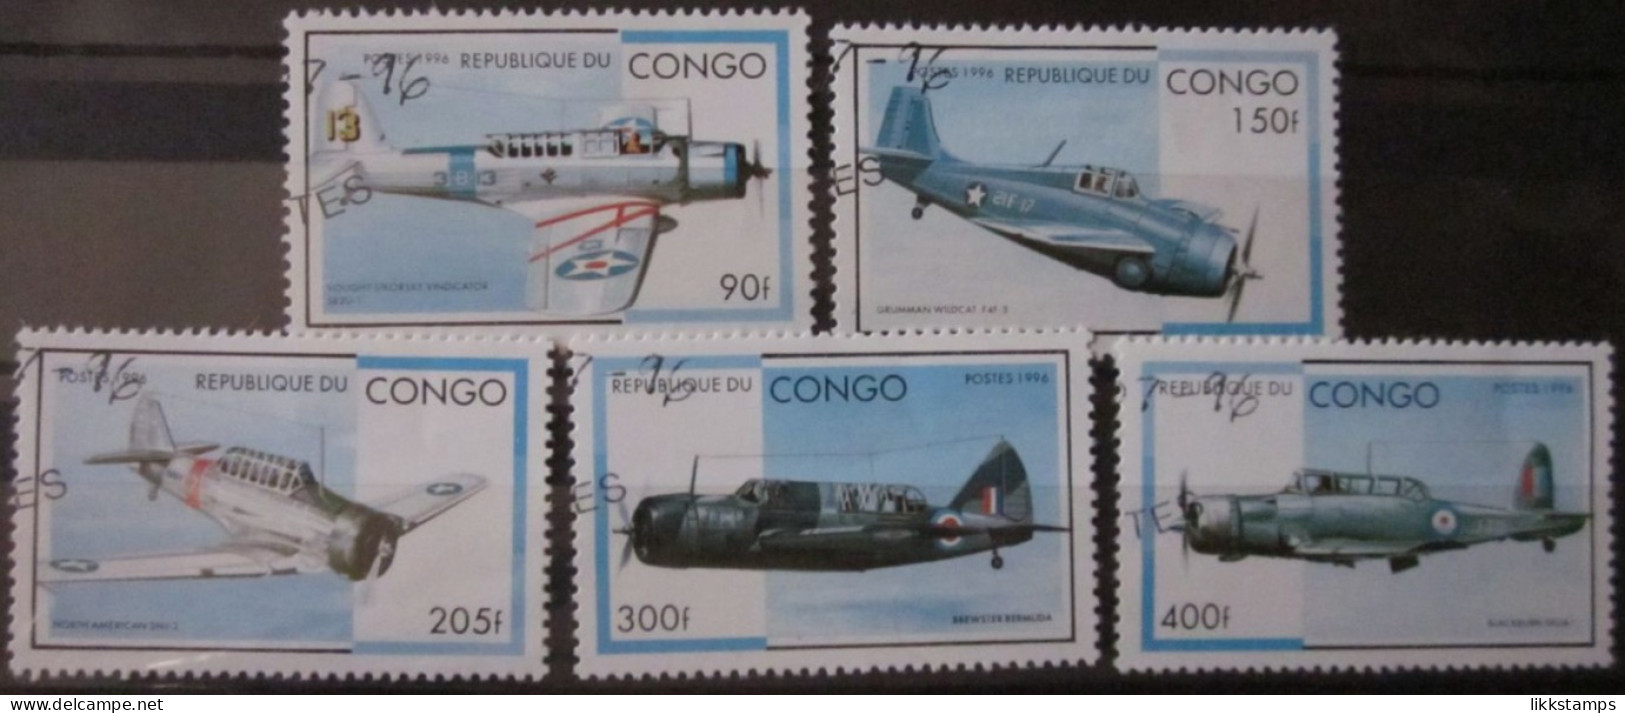 CONGO 24/06/1996 ~ MILITARY AIRCRAFT OF WWII. ~  VFU #03112 - Gebraucht